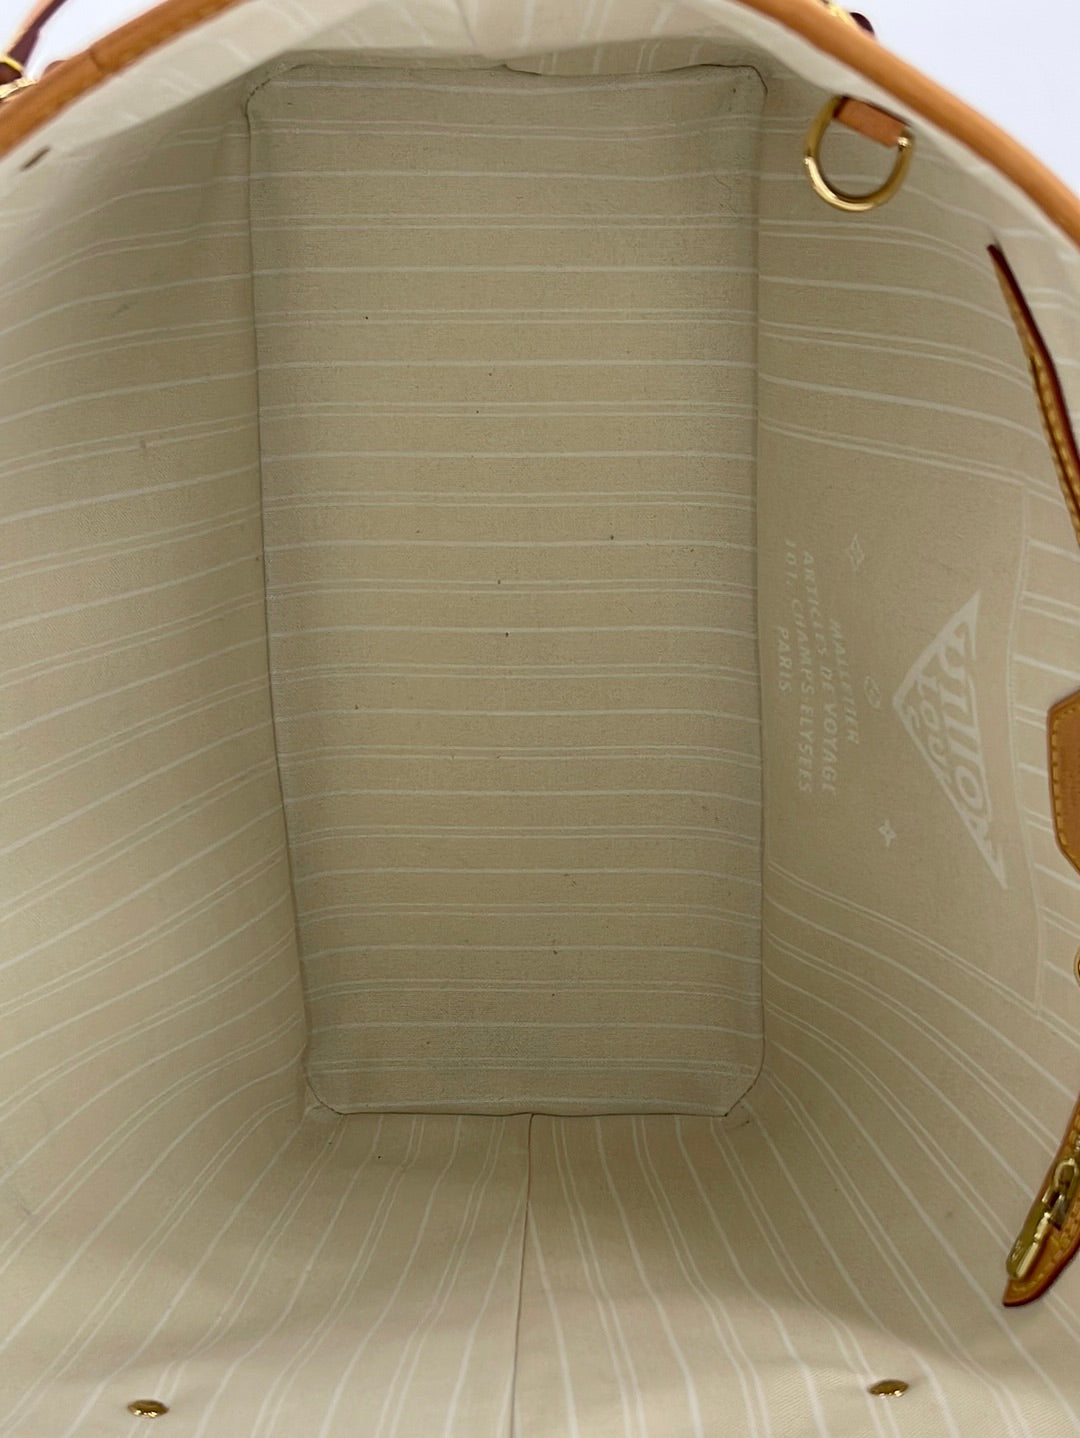 NTWRK - 082323 SNEAK PEEK Preloved Louis Vuitton Monogram Porte